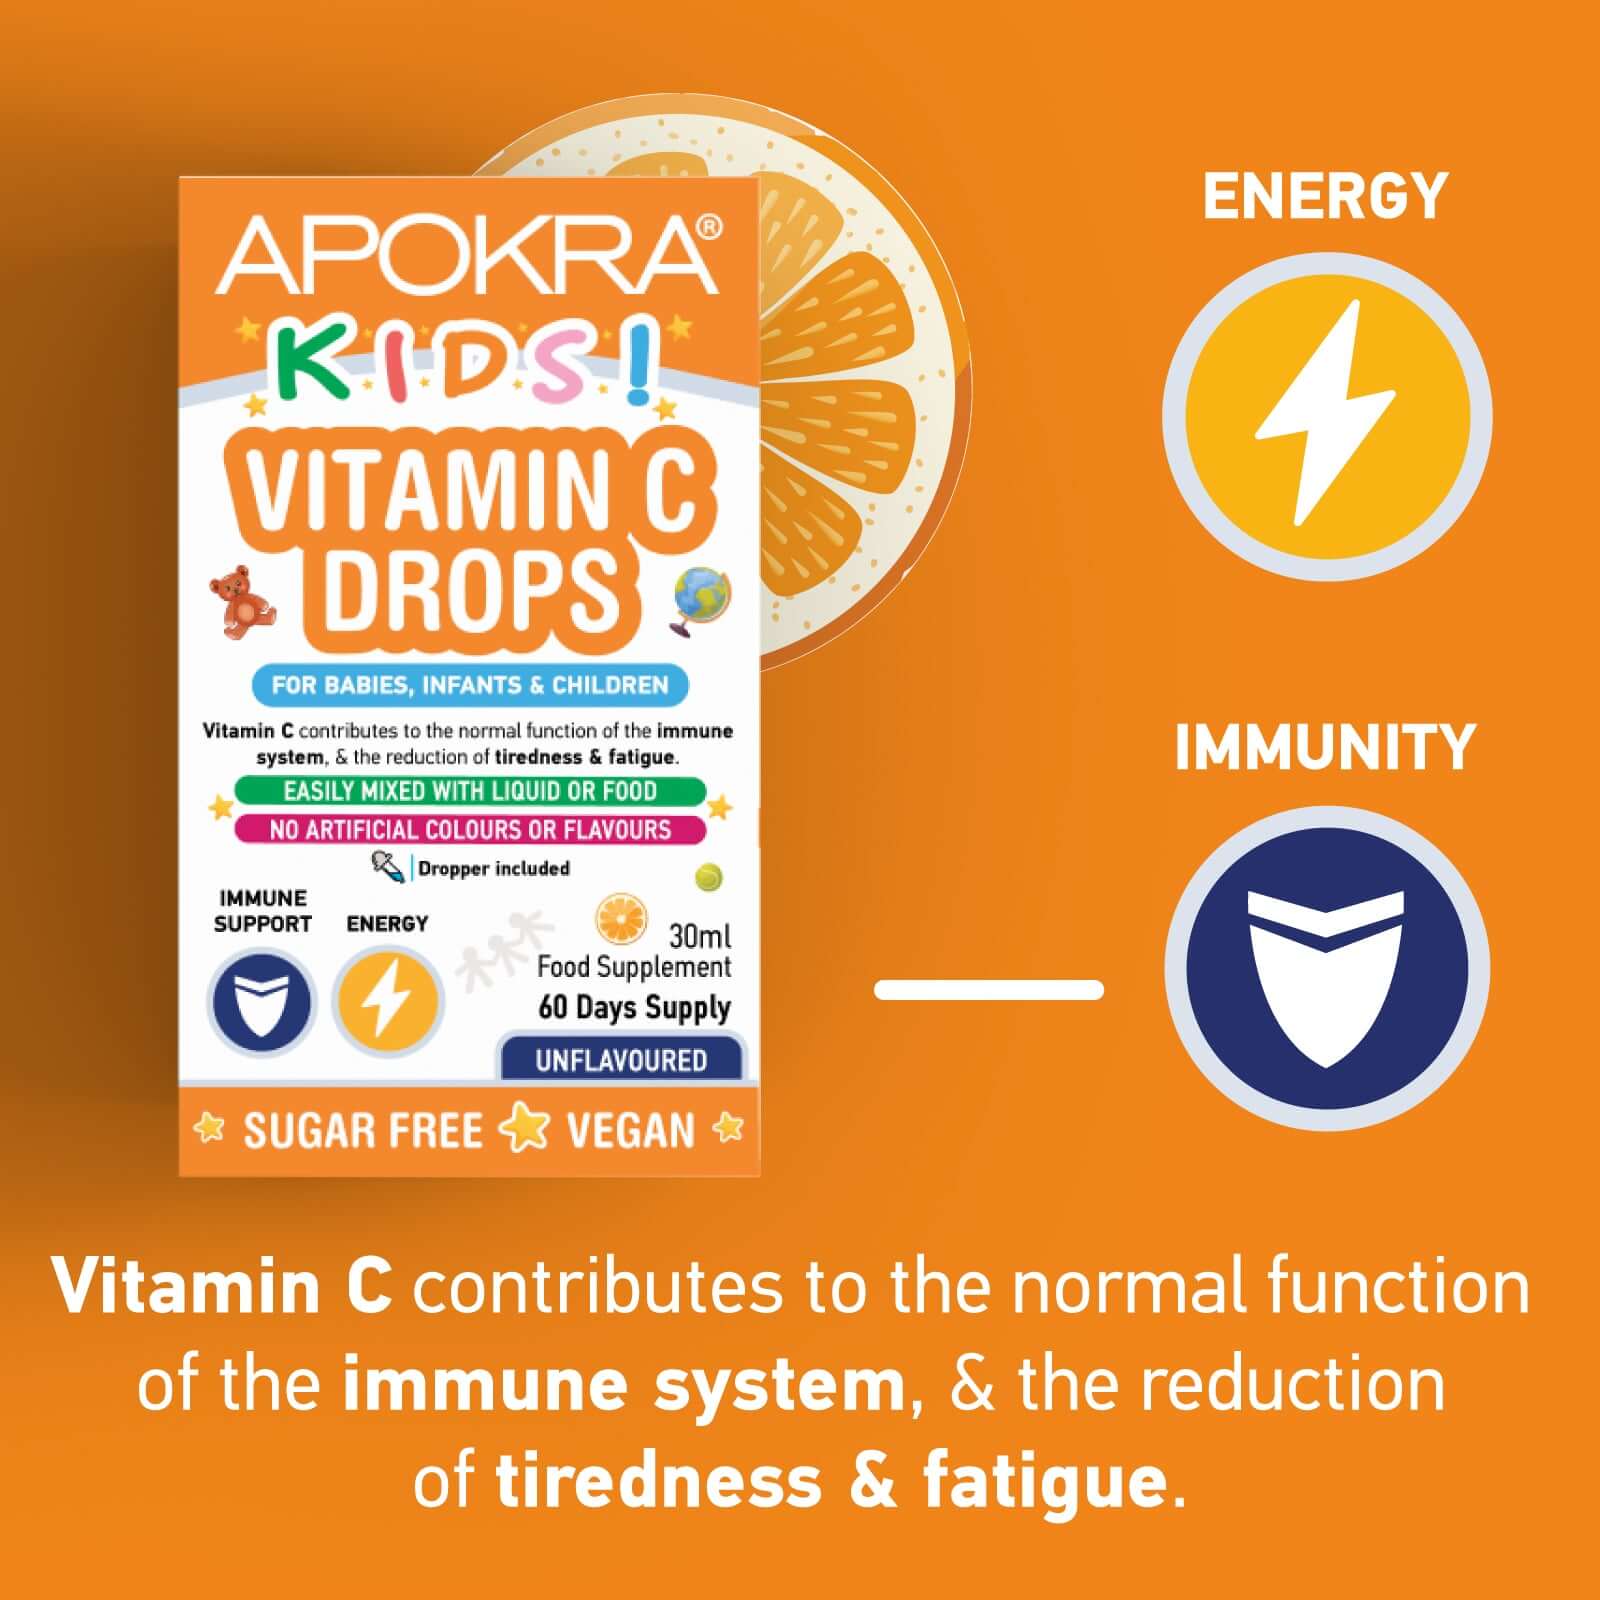 Vitamin C for immune support & energy - APOKRA Vitamin C for kids